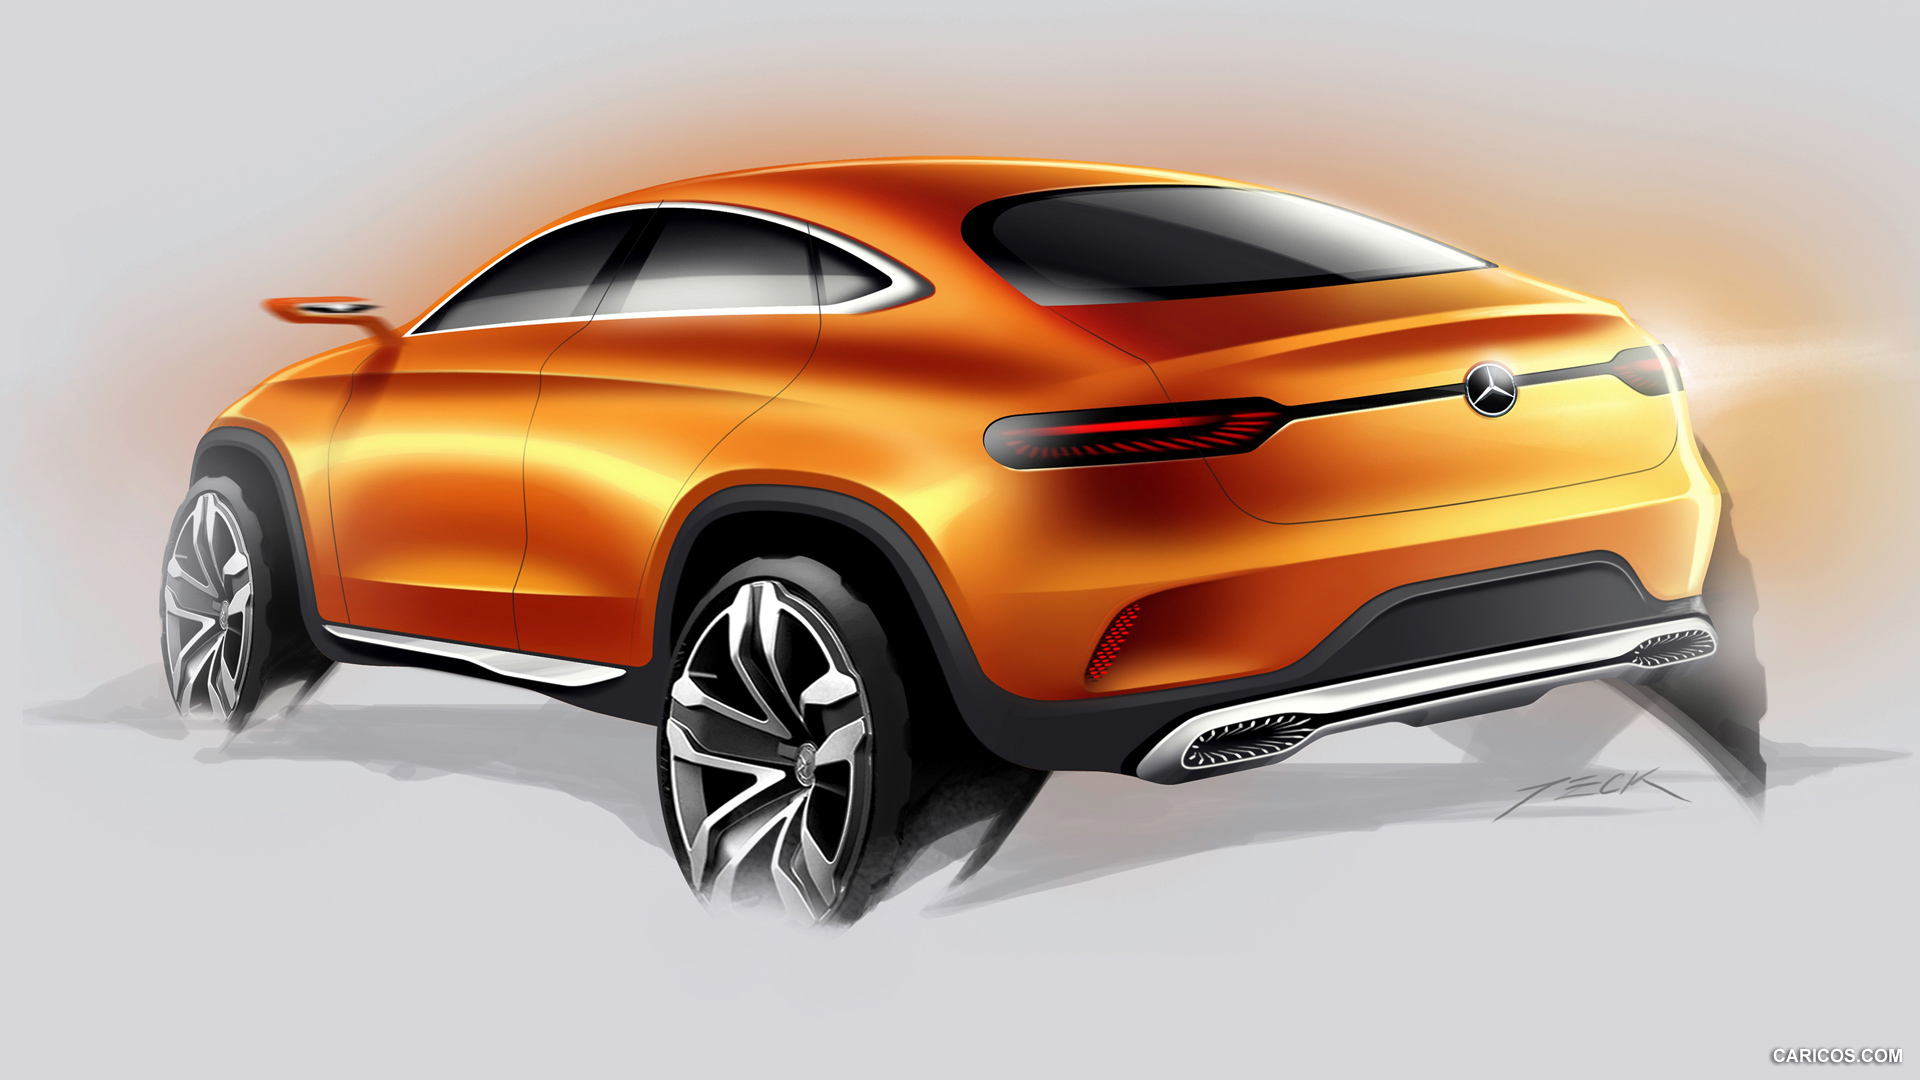 2014 Mercedes-Benz Coupe SUV Concept  - Design Sketch, #17 of 17